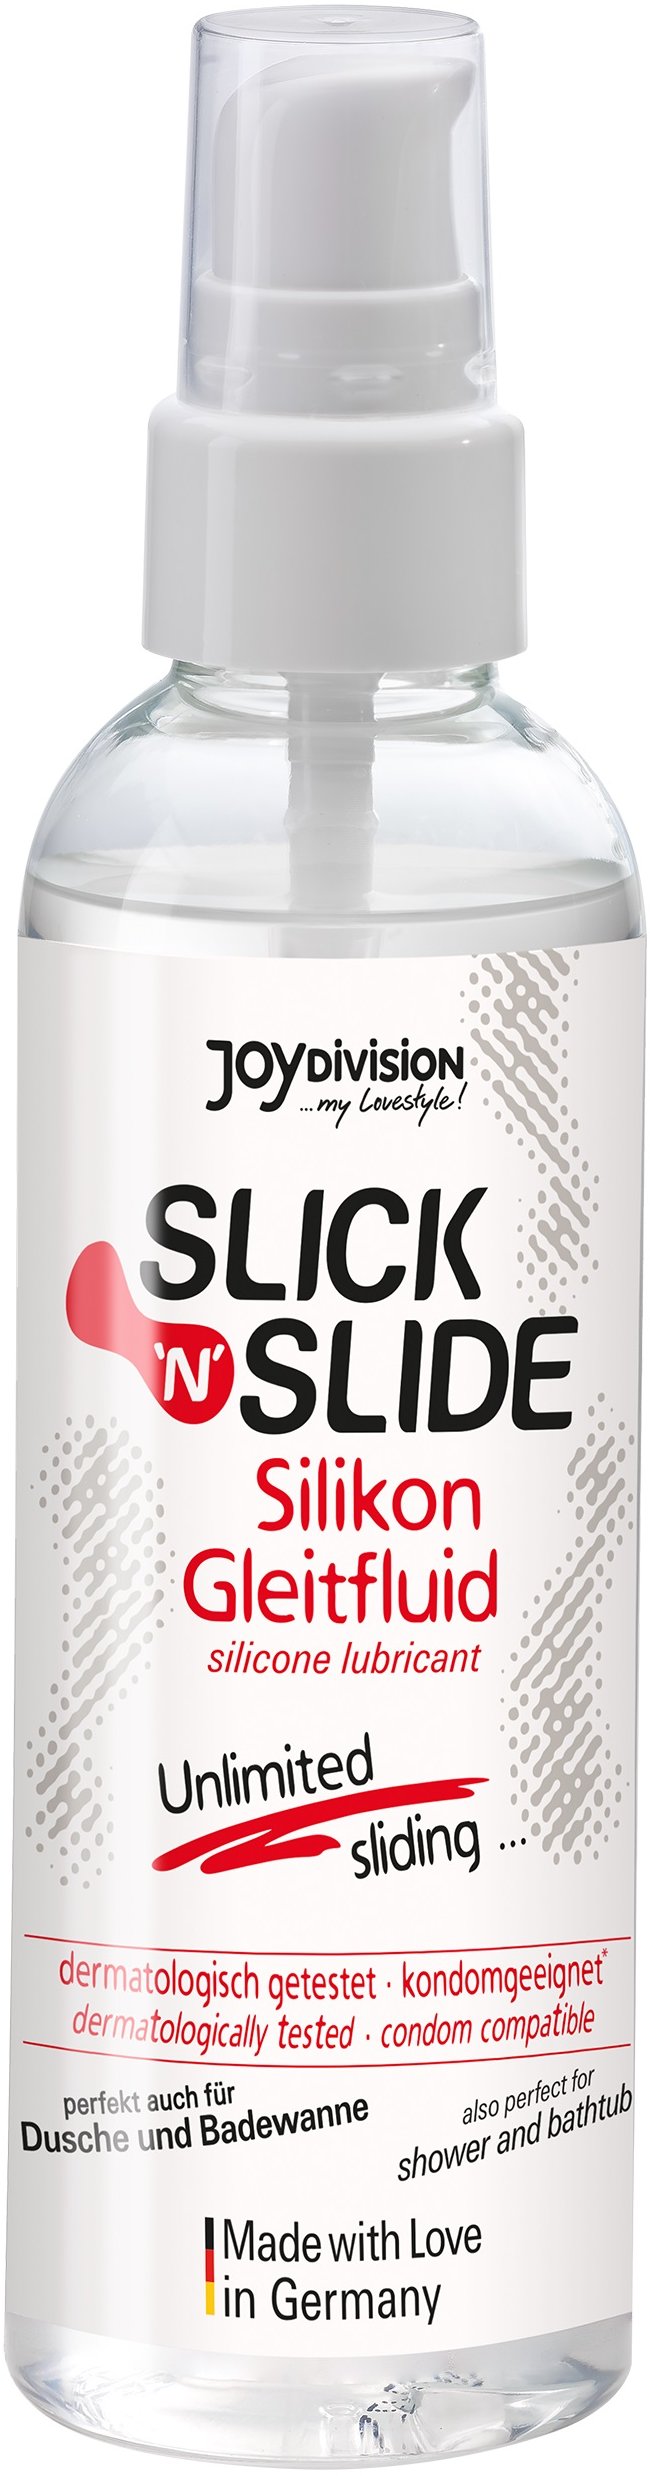 

Лубрикант JoyDivision - SLICK'n'SLIDE, 100 мл